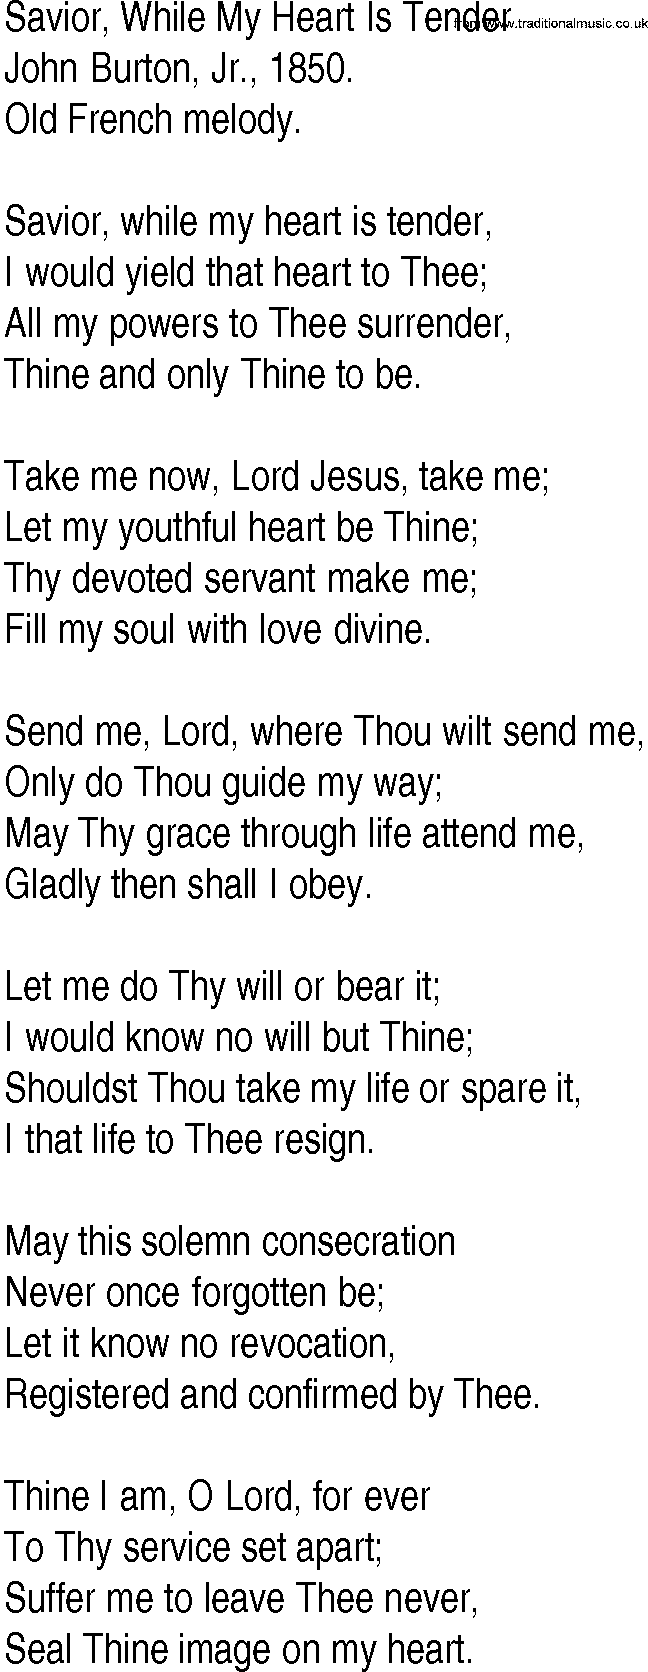 Hymn and Gospel Song: Savior, While My Heart Is Tender by John Burton Jr lyrics